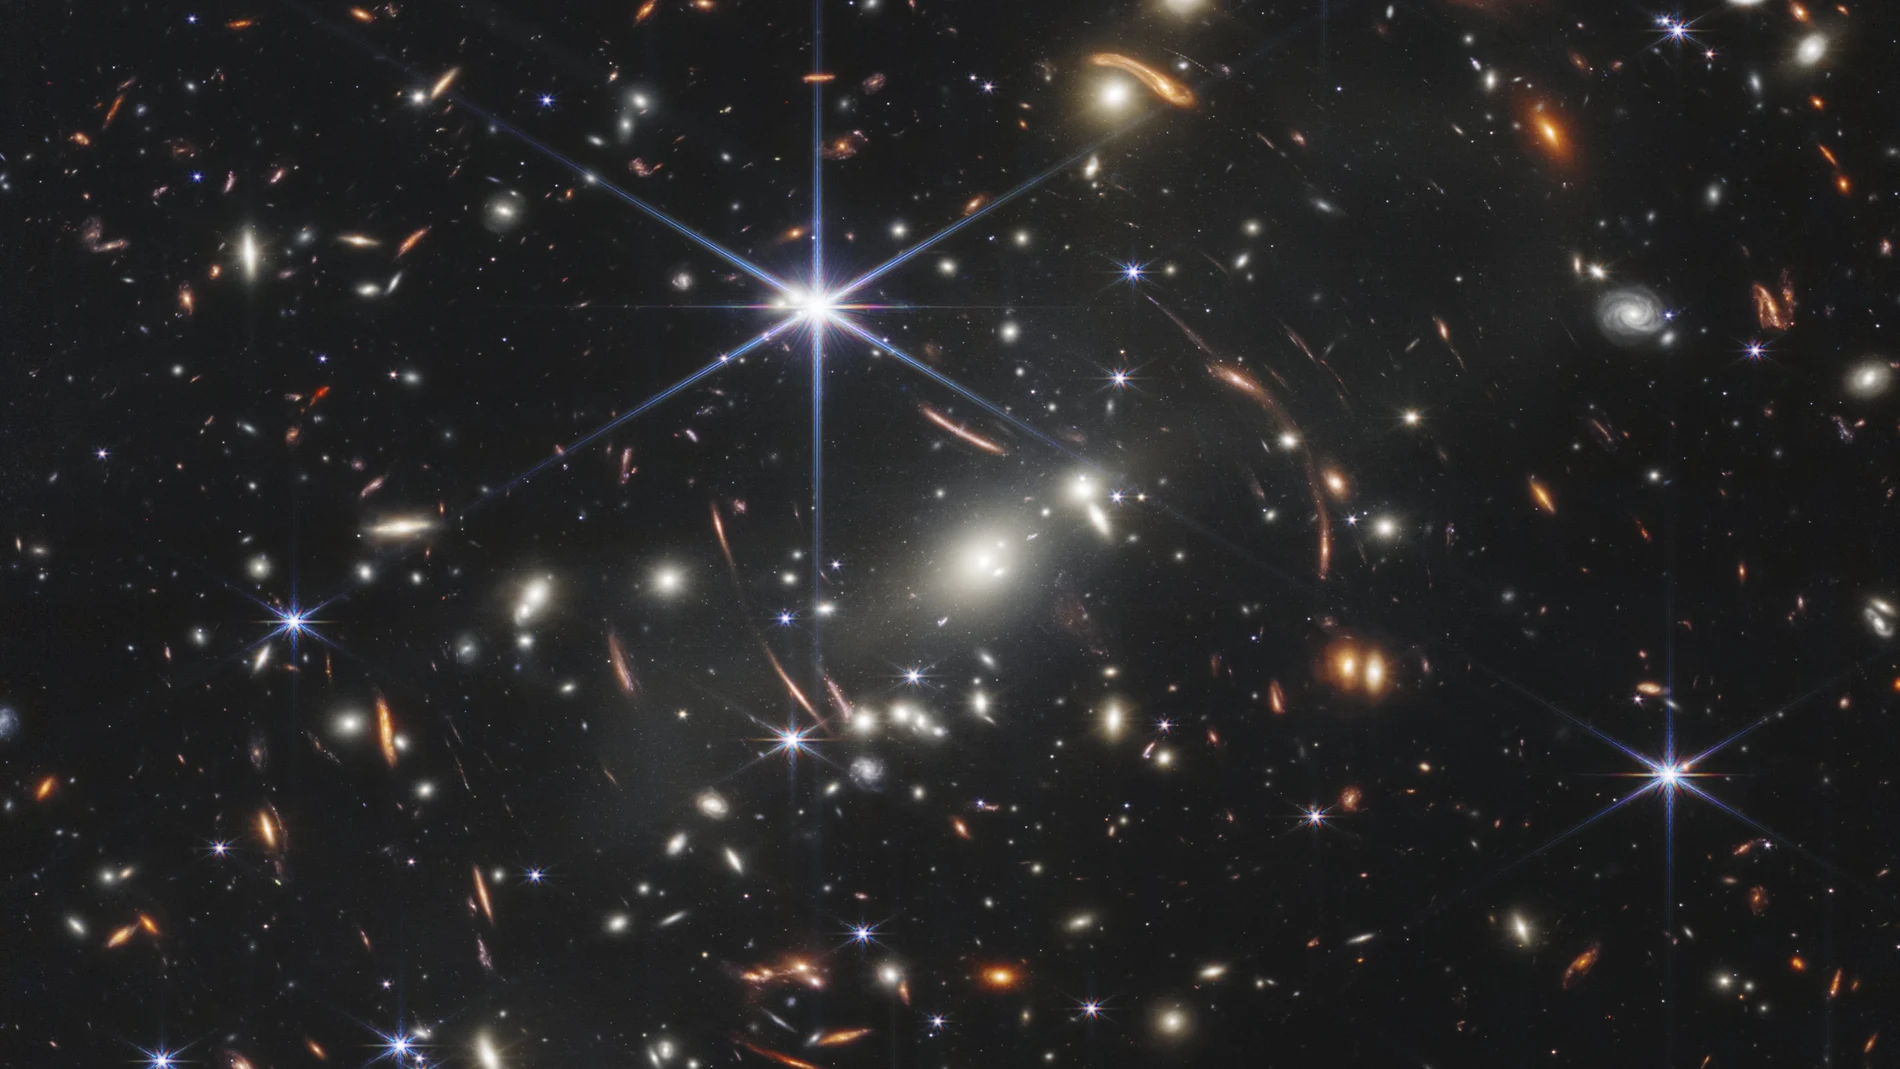 Imagen de SMACS 0723 tomada por el telescopio James Webb (NASA, ESA, CSA, STScI via AP)